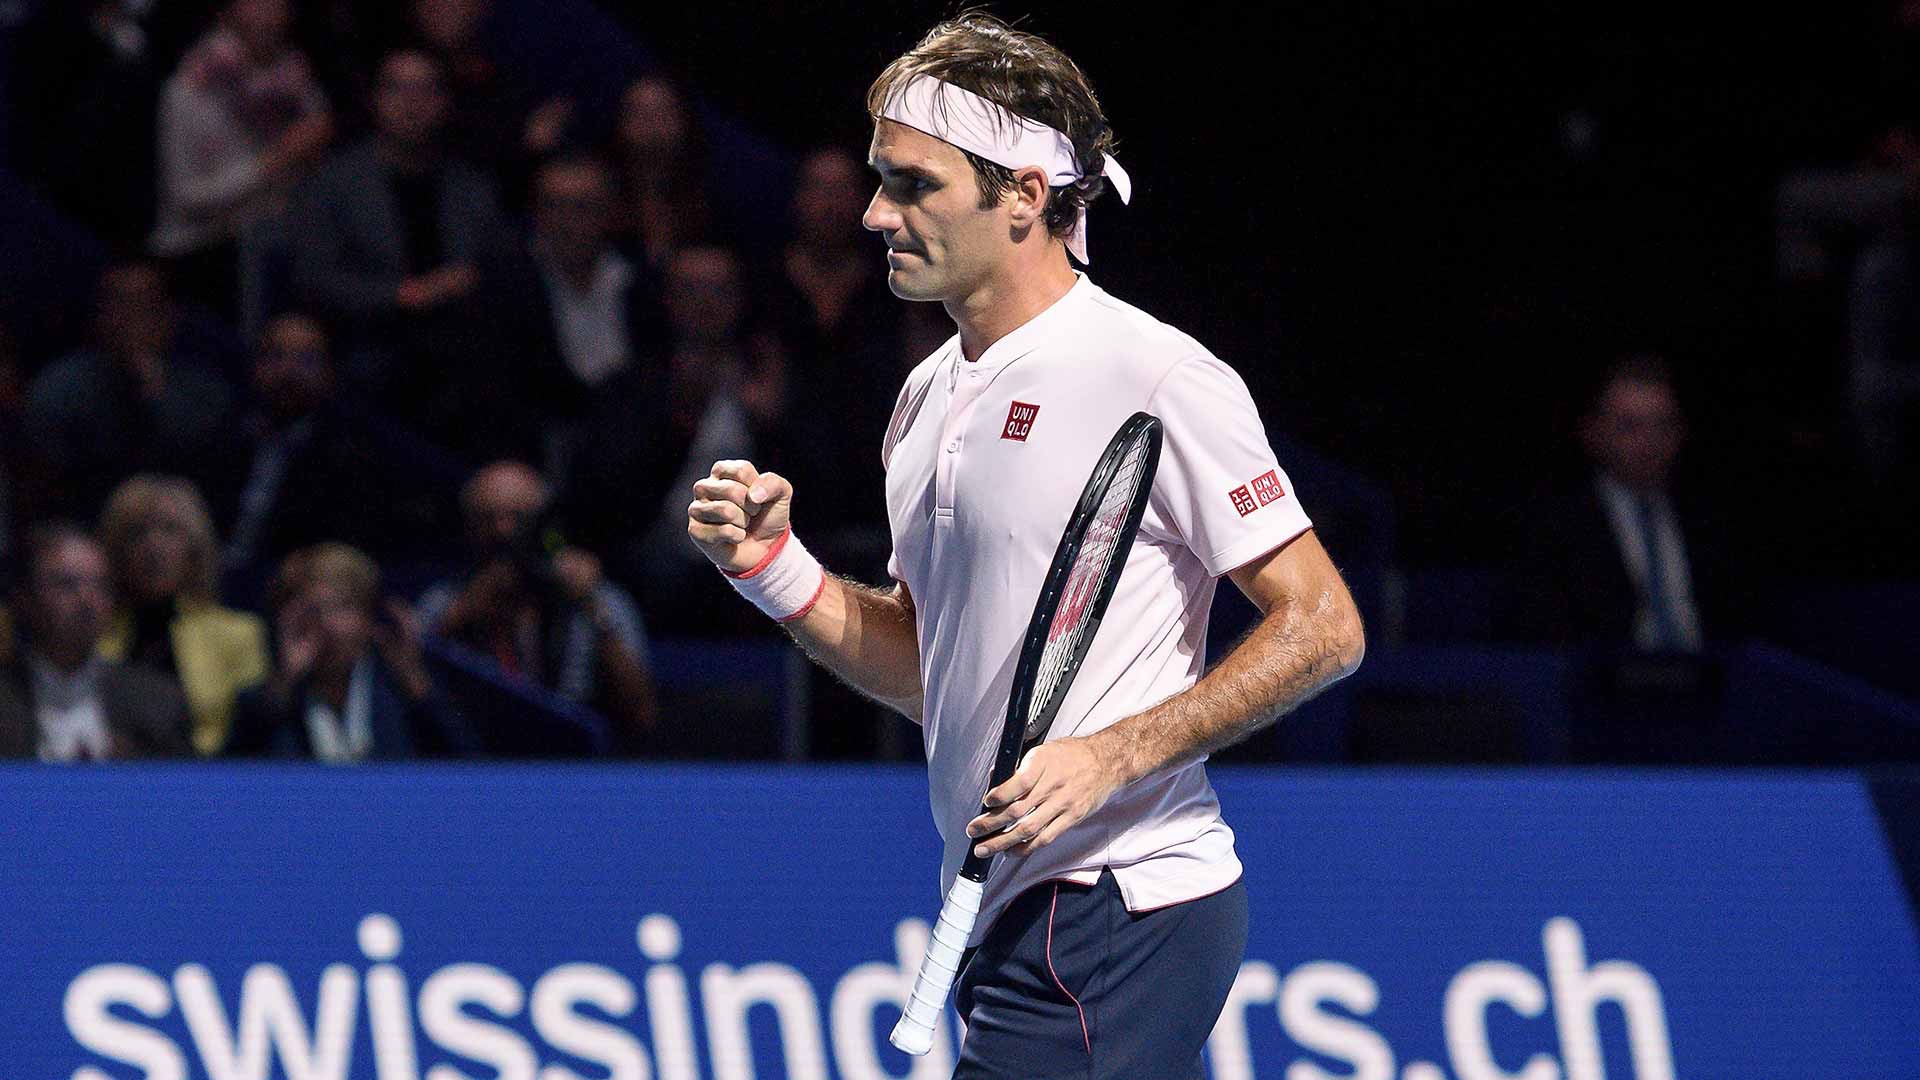 Federer Battles Past Simon into Swiss Indoors Semifinals